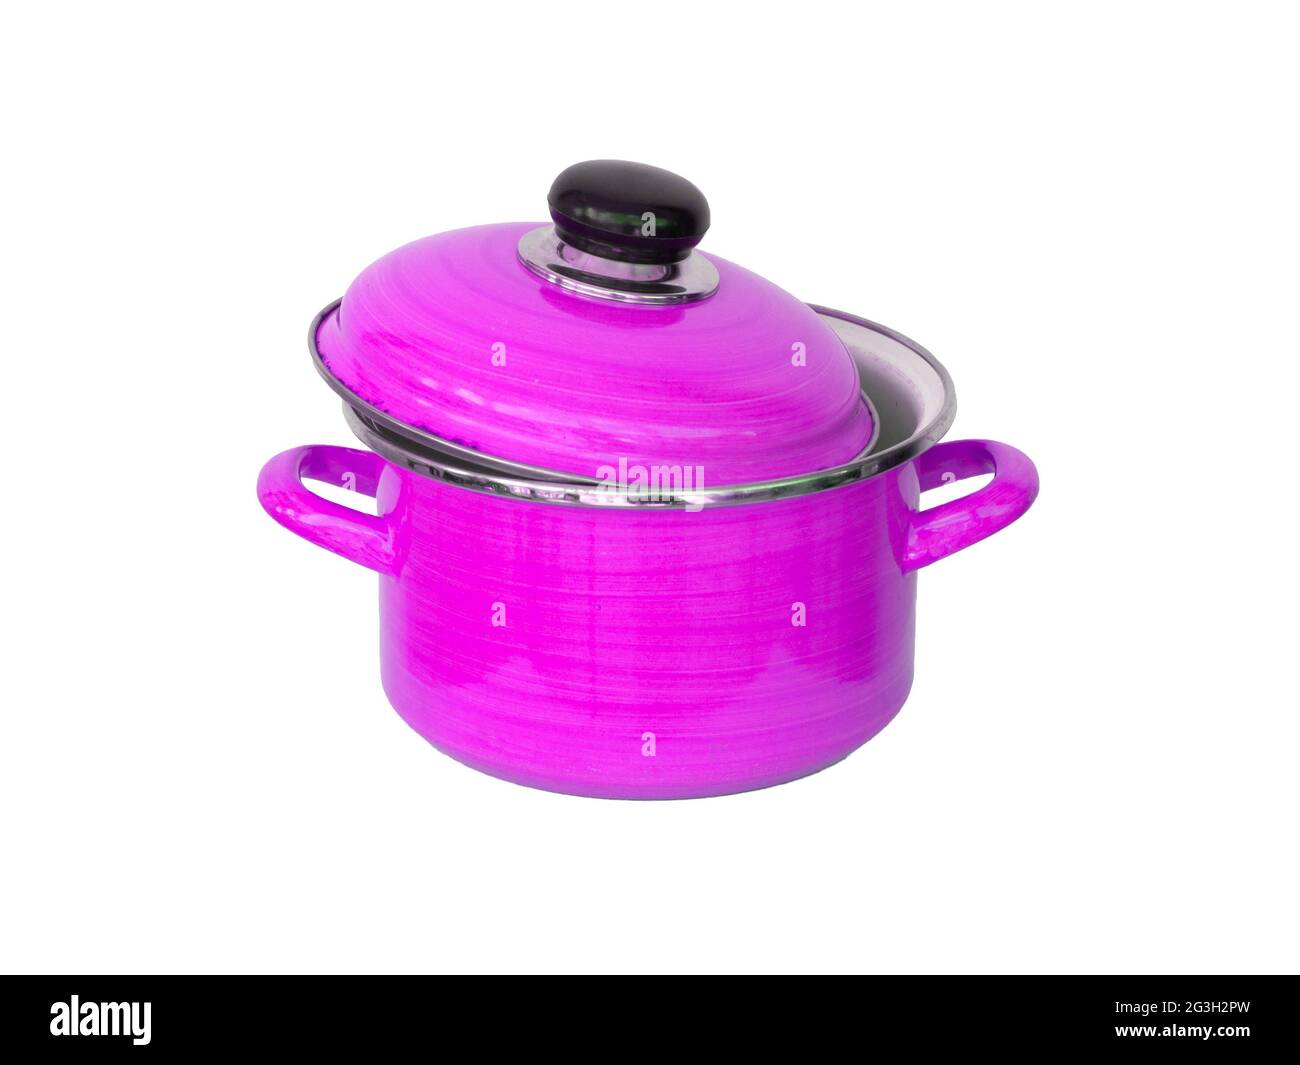 Old pink metal cooking pot Stock Photo